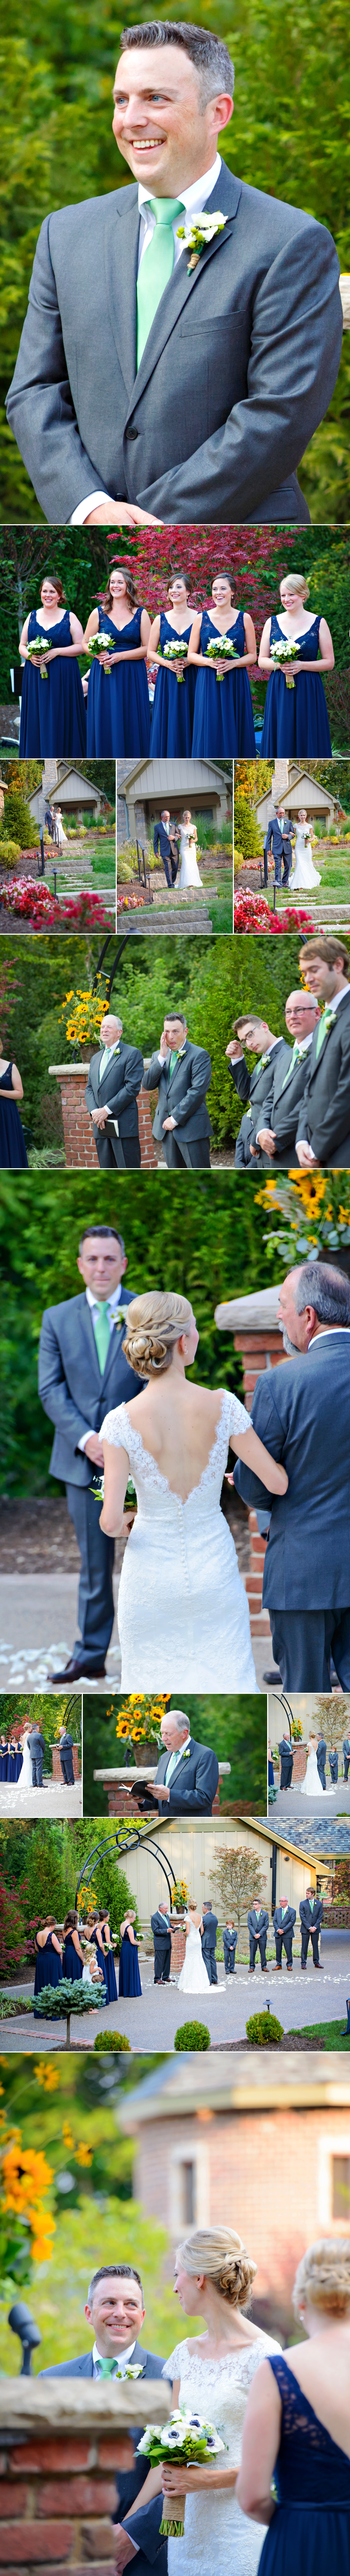 St. Louis Engagement & Wedding Photographer; Illumen Photography; www.illumenphotography.com